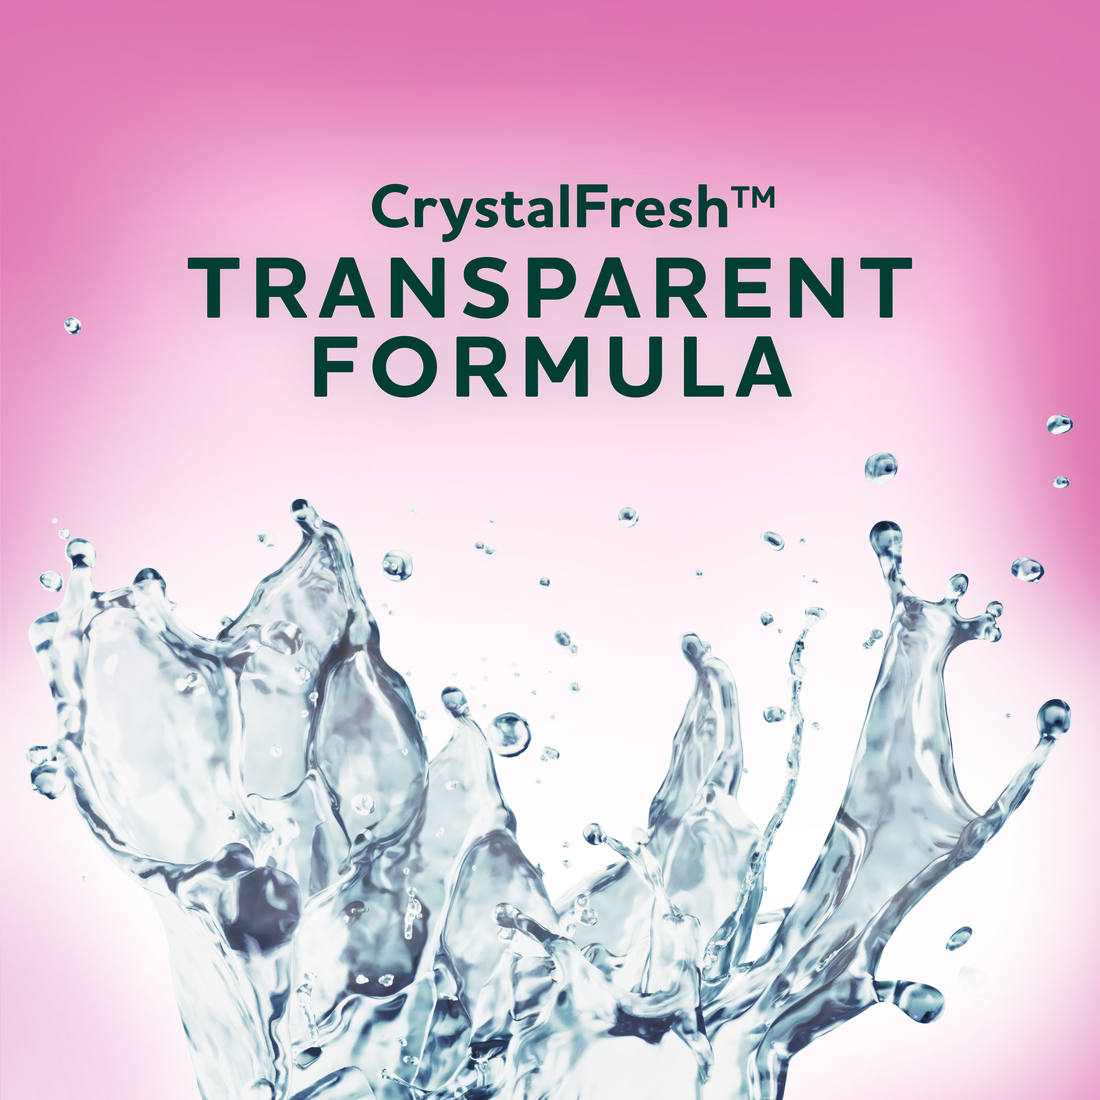 Crystal Fresh trademark
Transparent formula